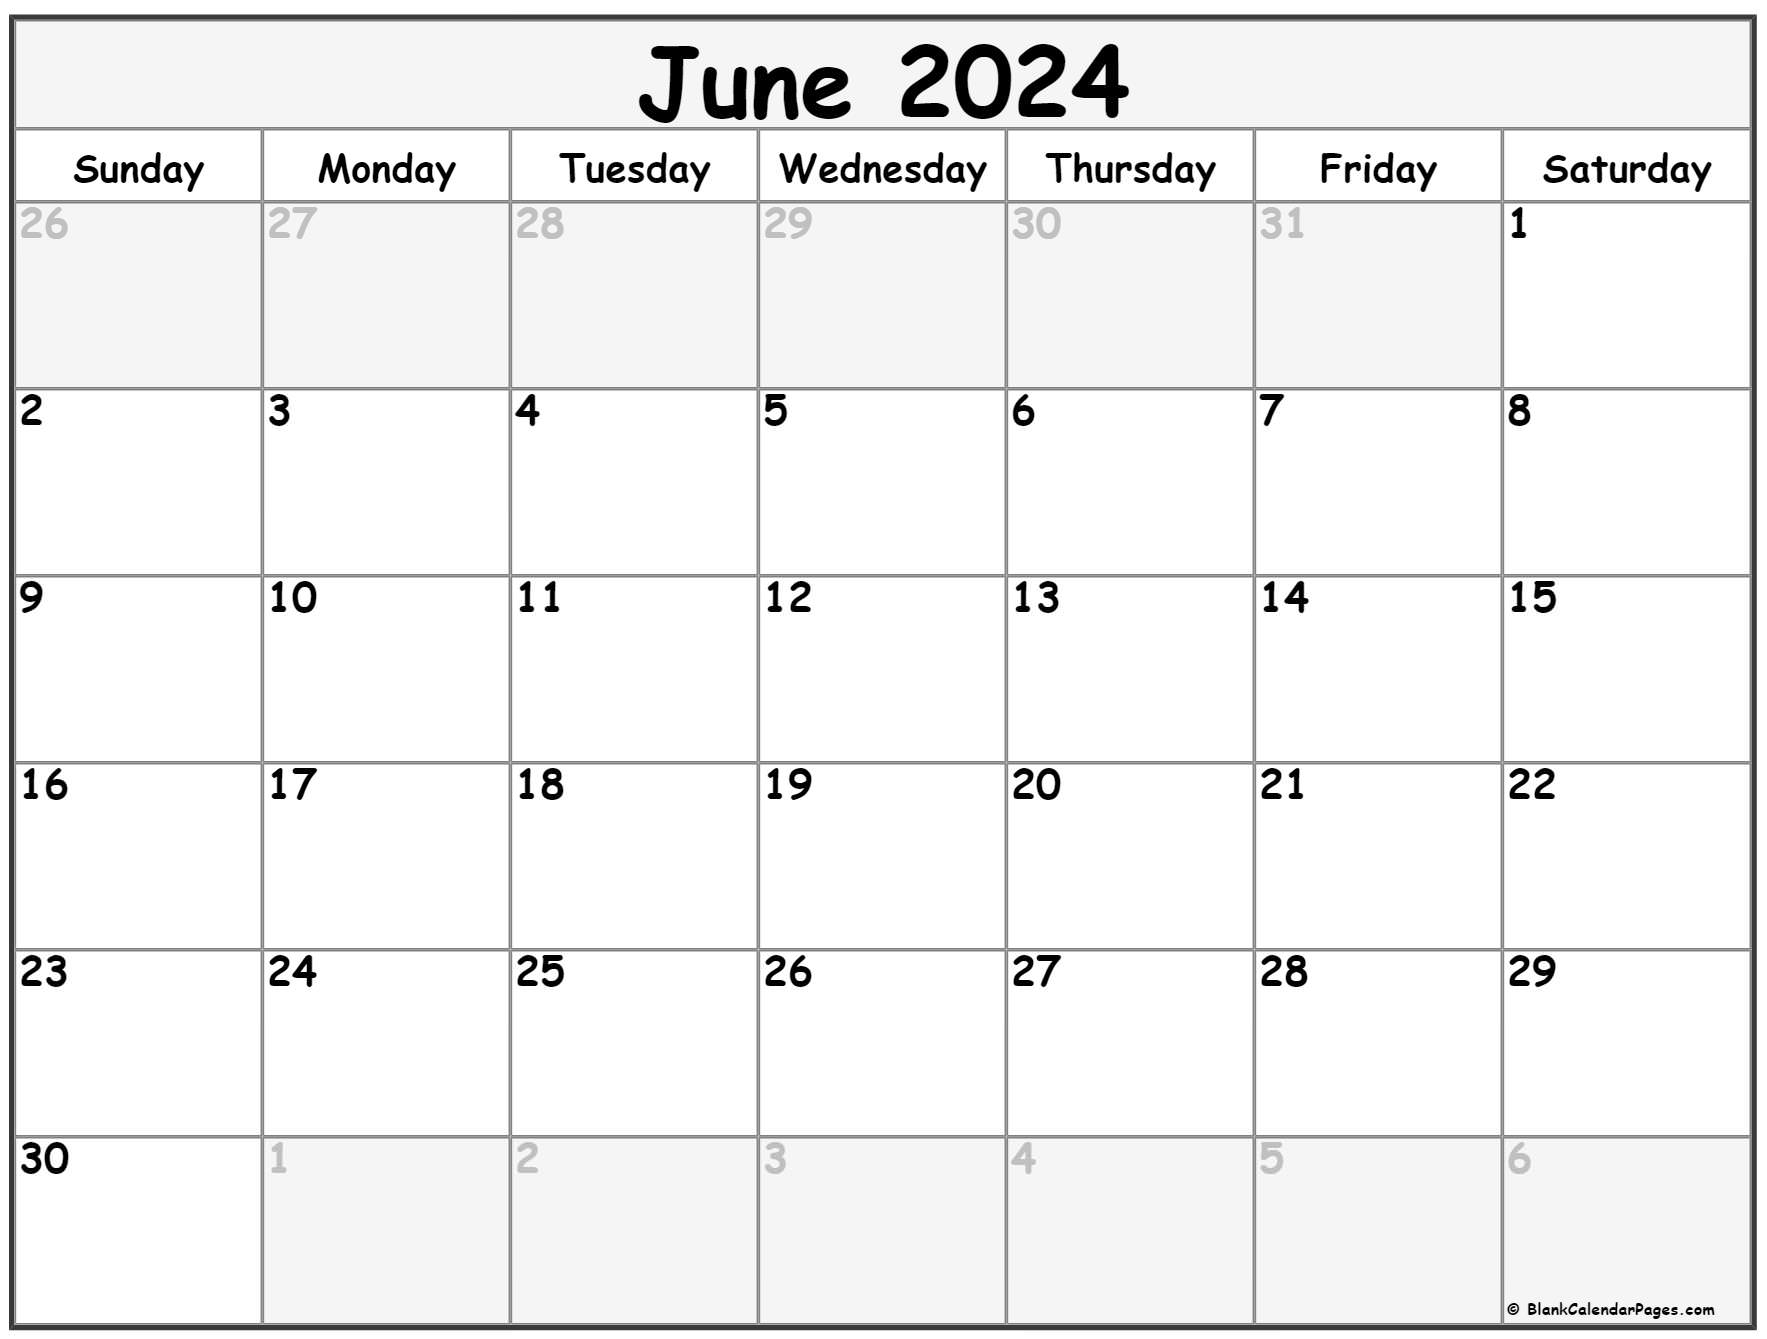 June 2024 Calendar | Free Printable Calendar for Calendar June 2024 Printable